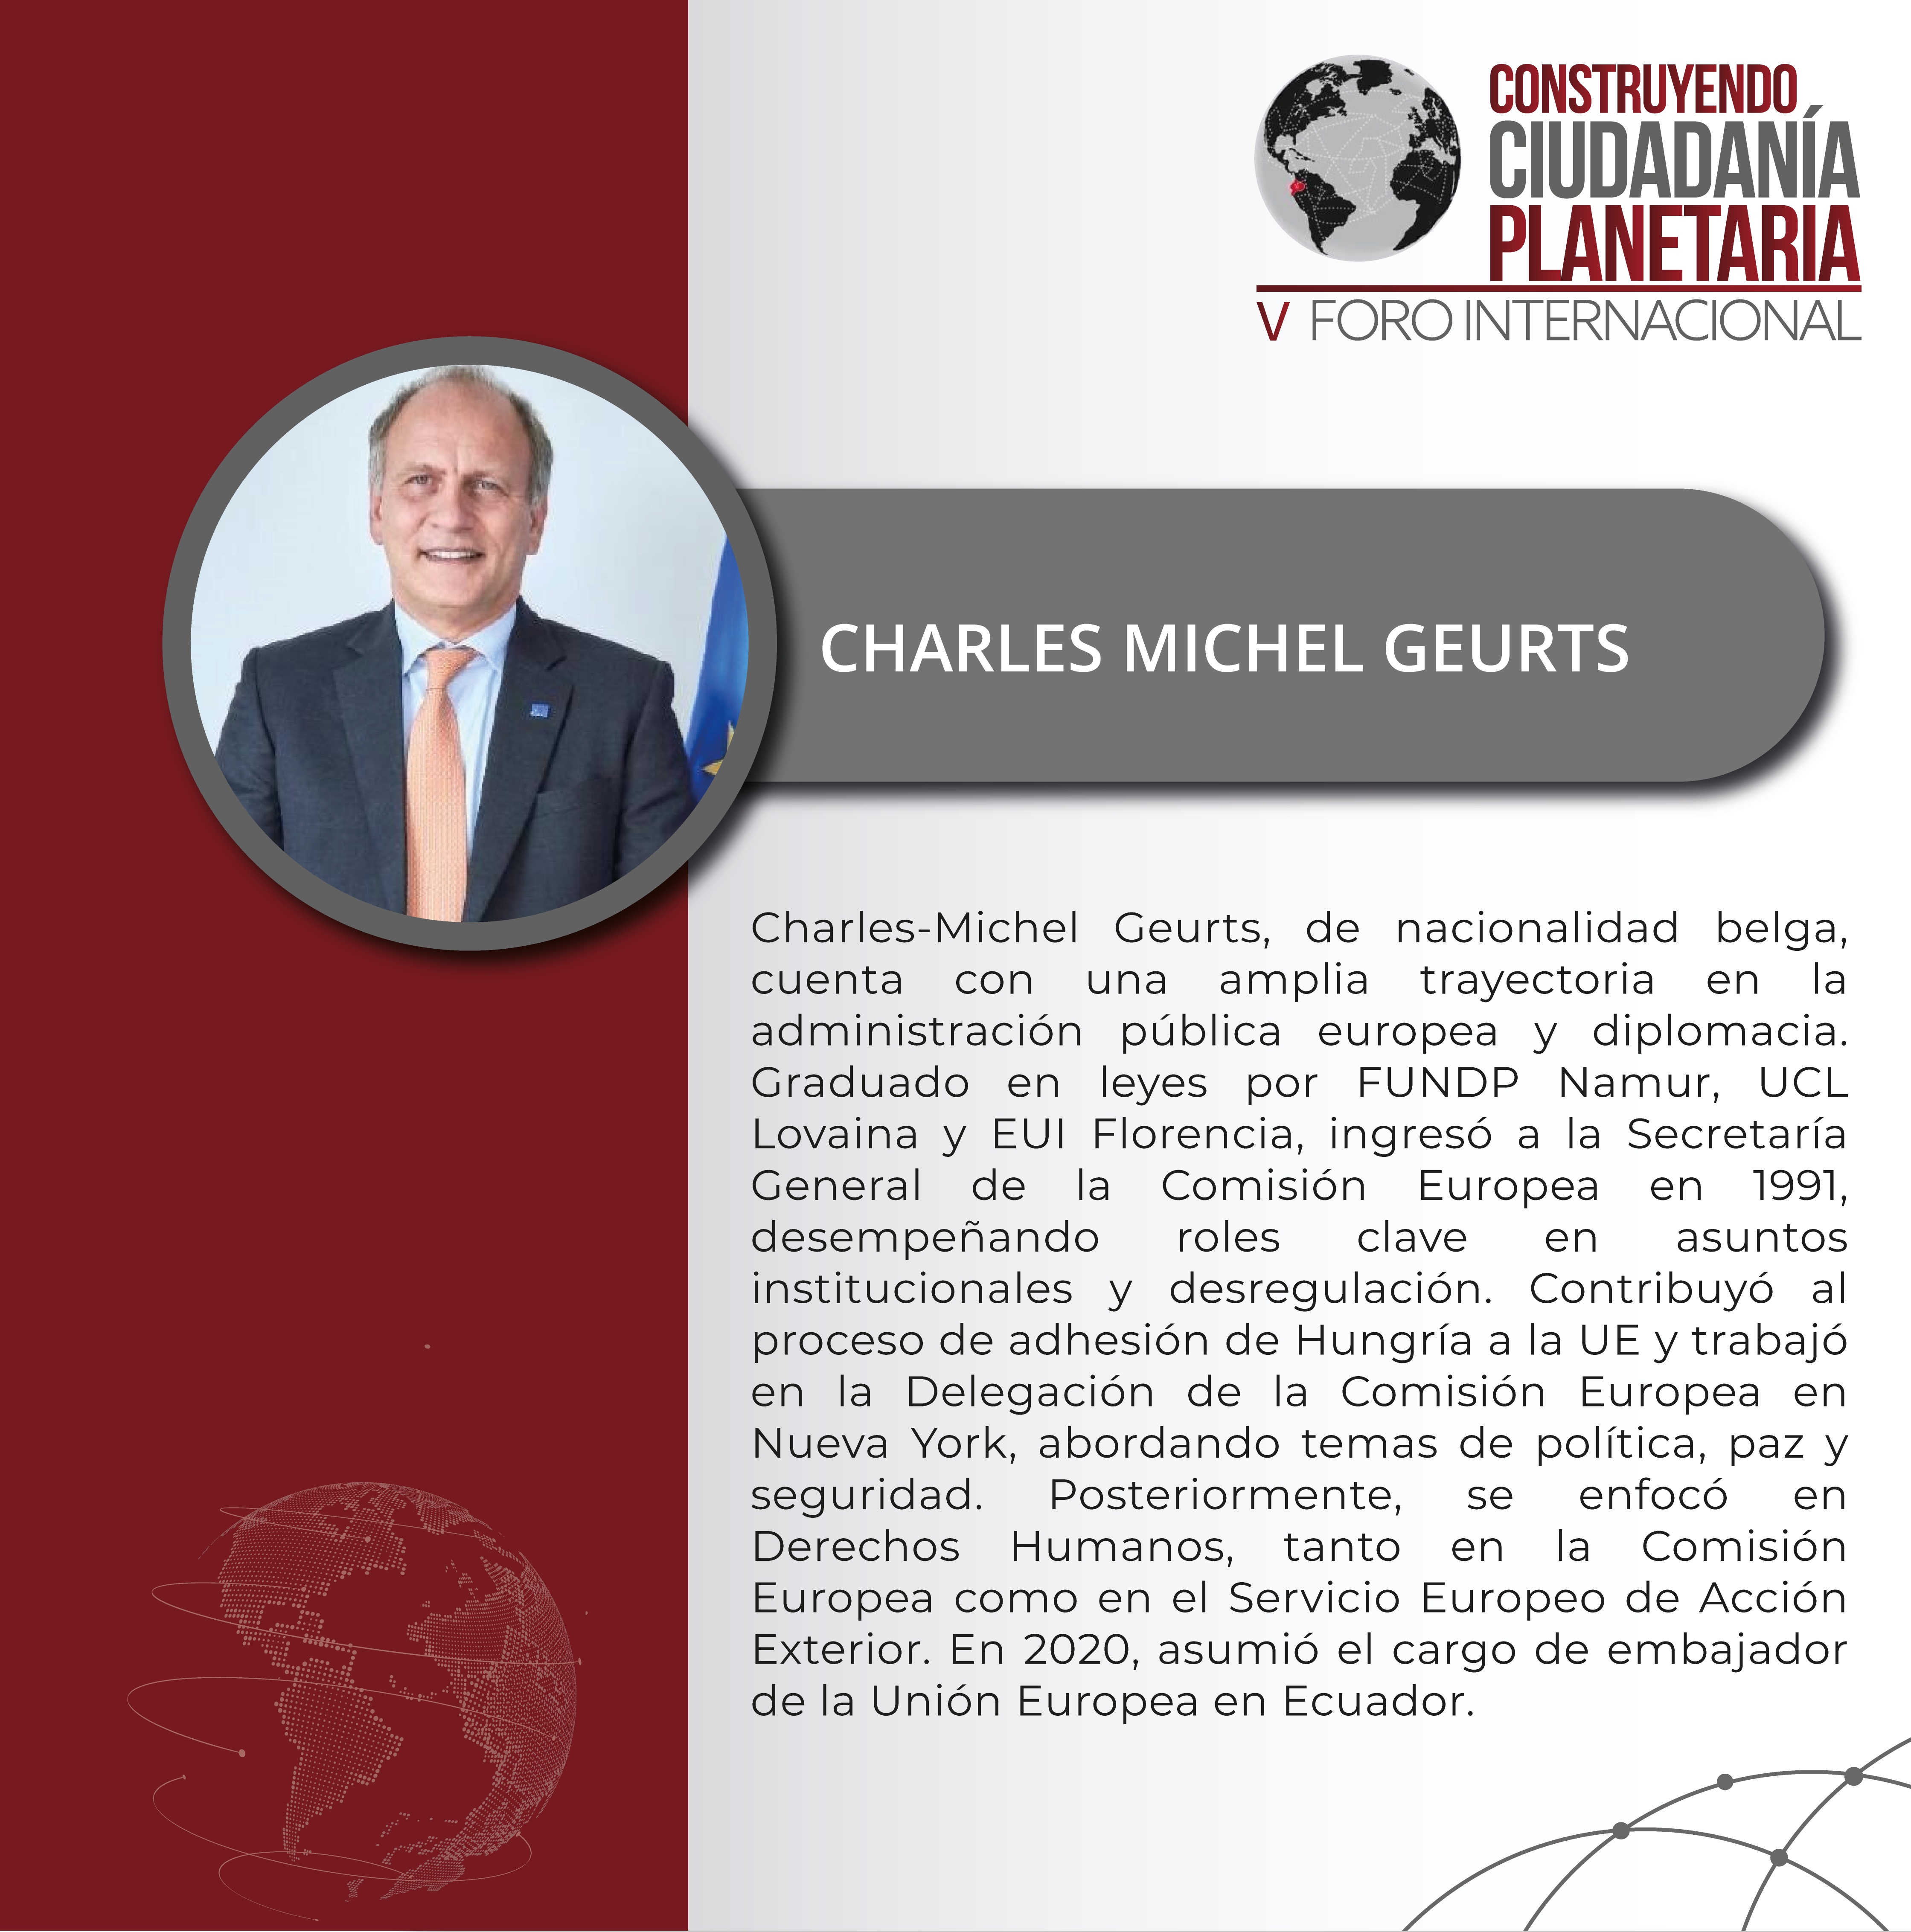 CHARLES MICHEL GEURTS